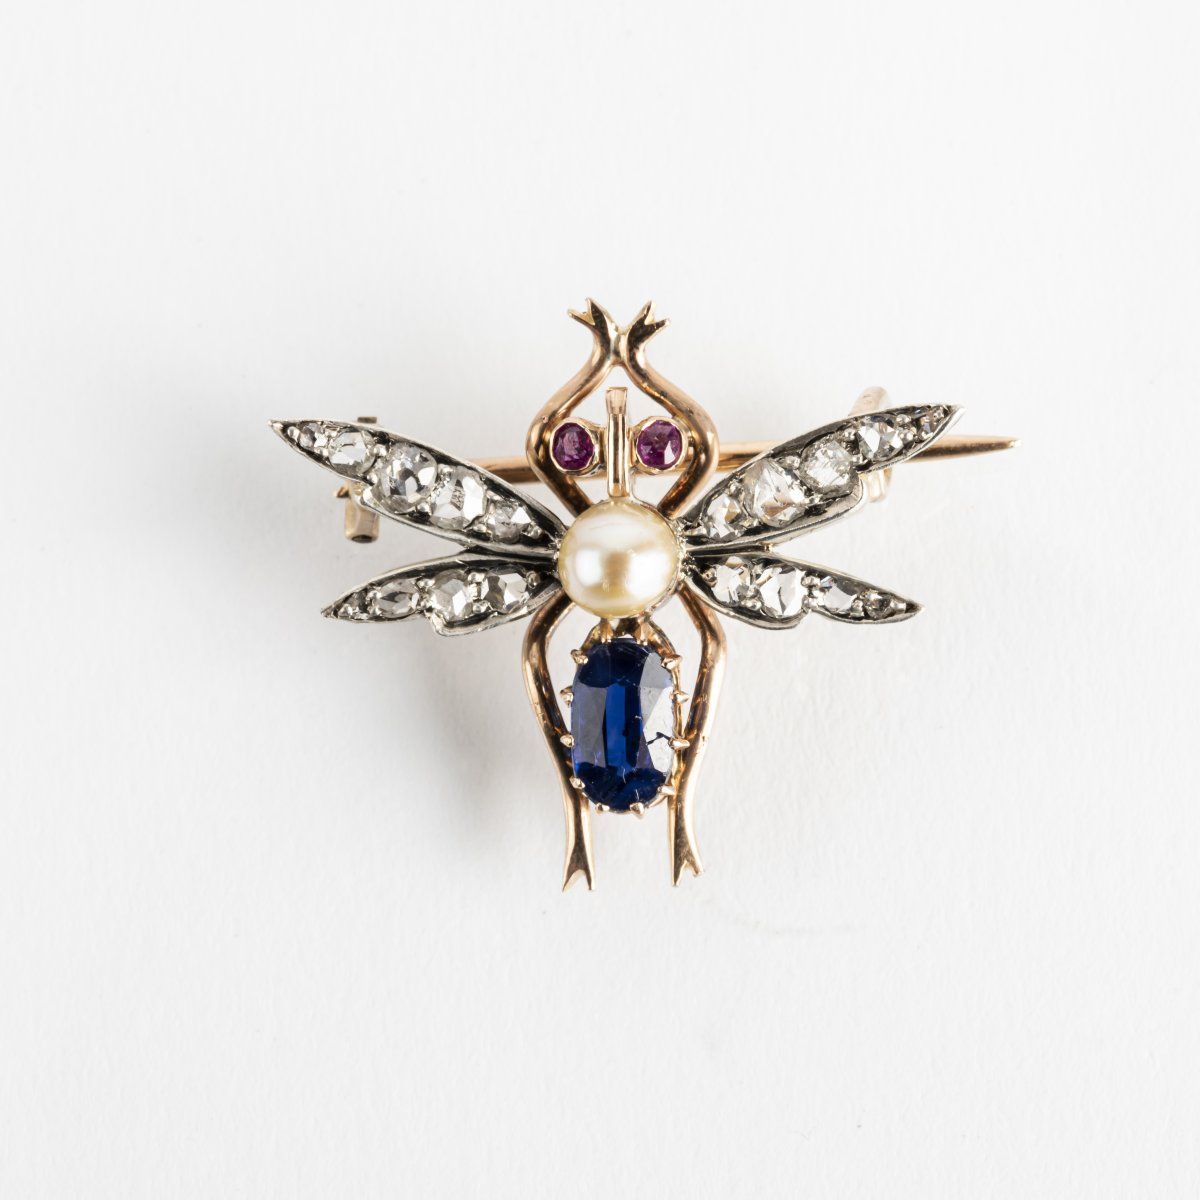 Null 英国，昆虫胸针，约1890年，18ct.黄金，钻石，蓝宝石，红宝石，珍珠。4克。23 x 27毫米。

没有签名。,